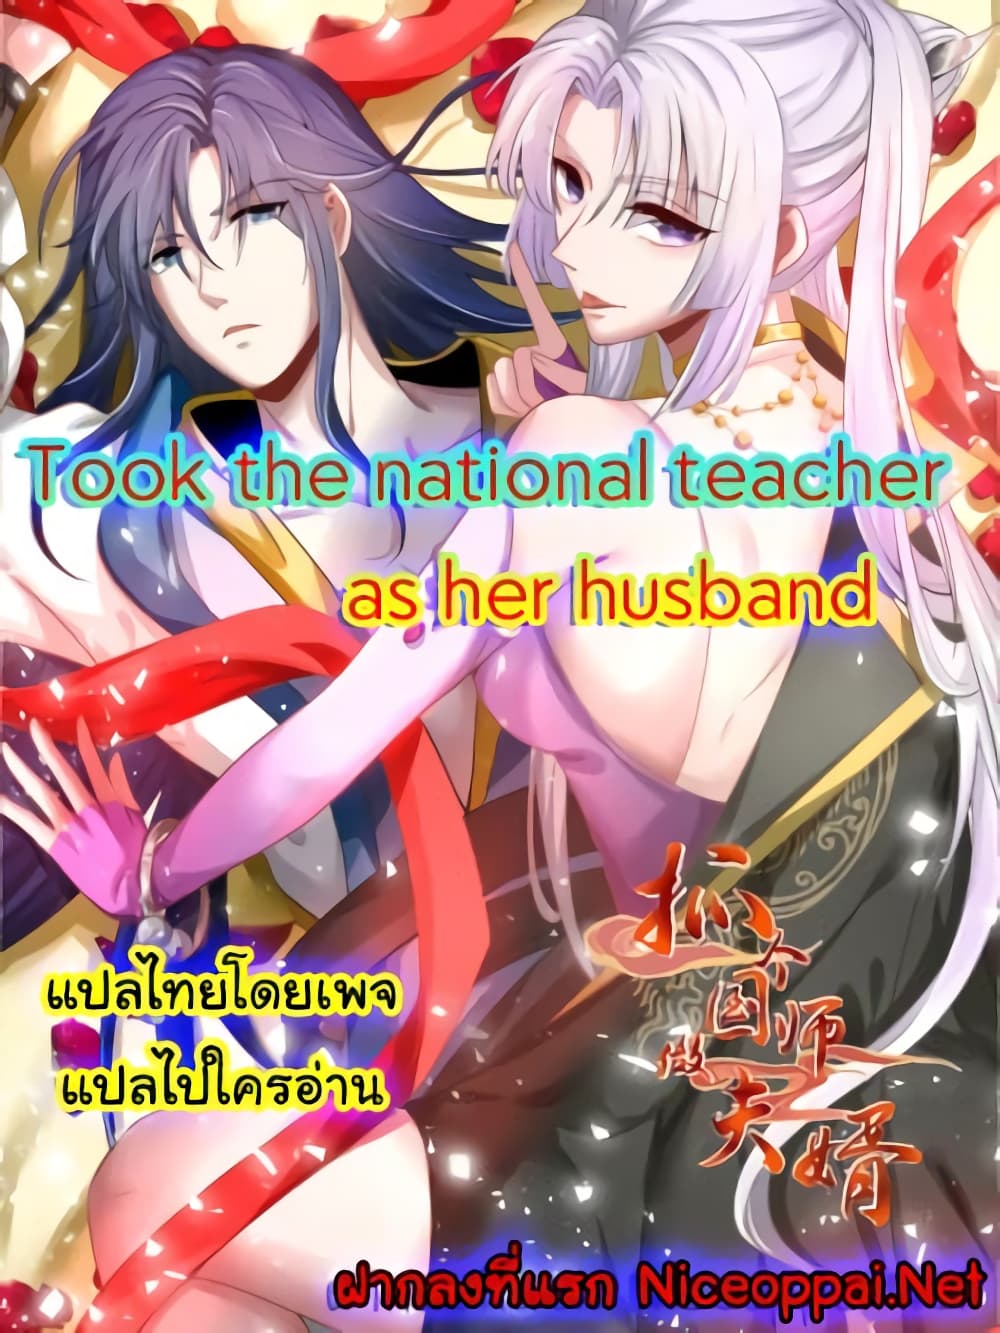 Took the National Teacher as Her Husband 19 (1)